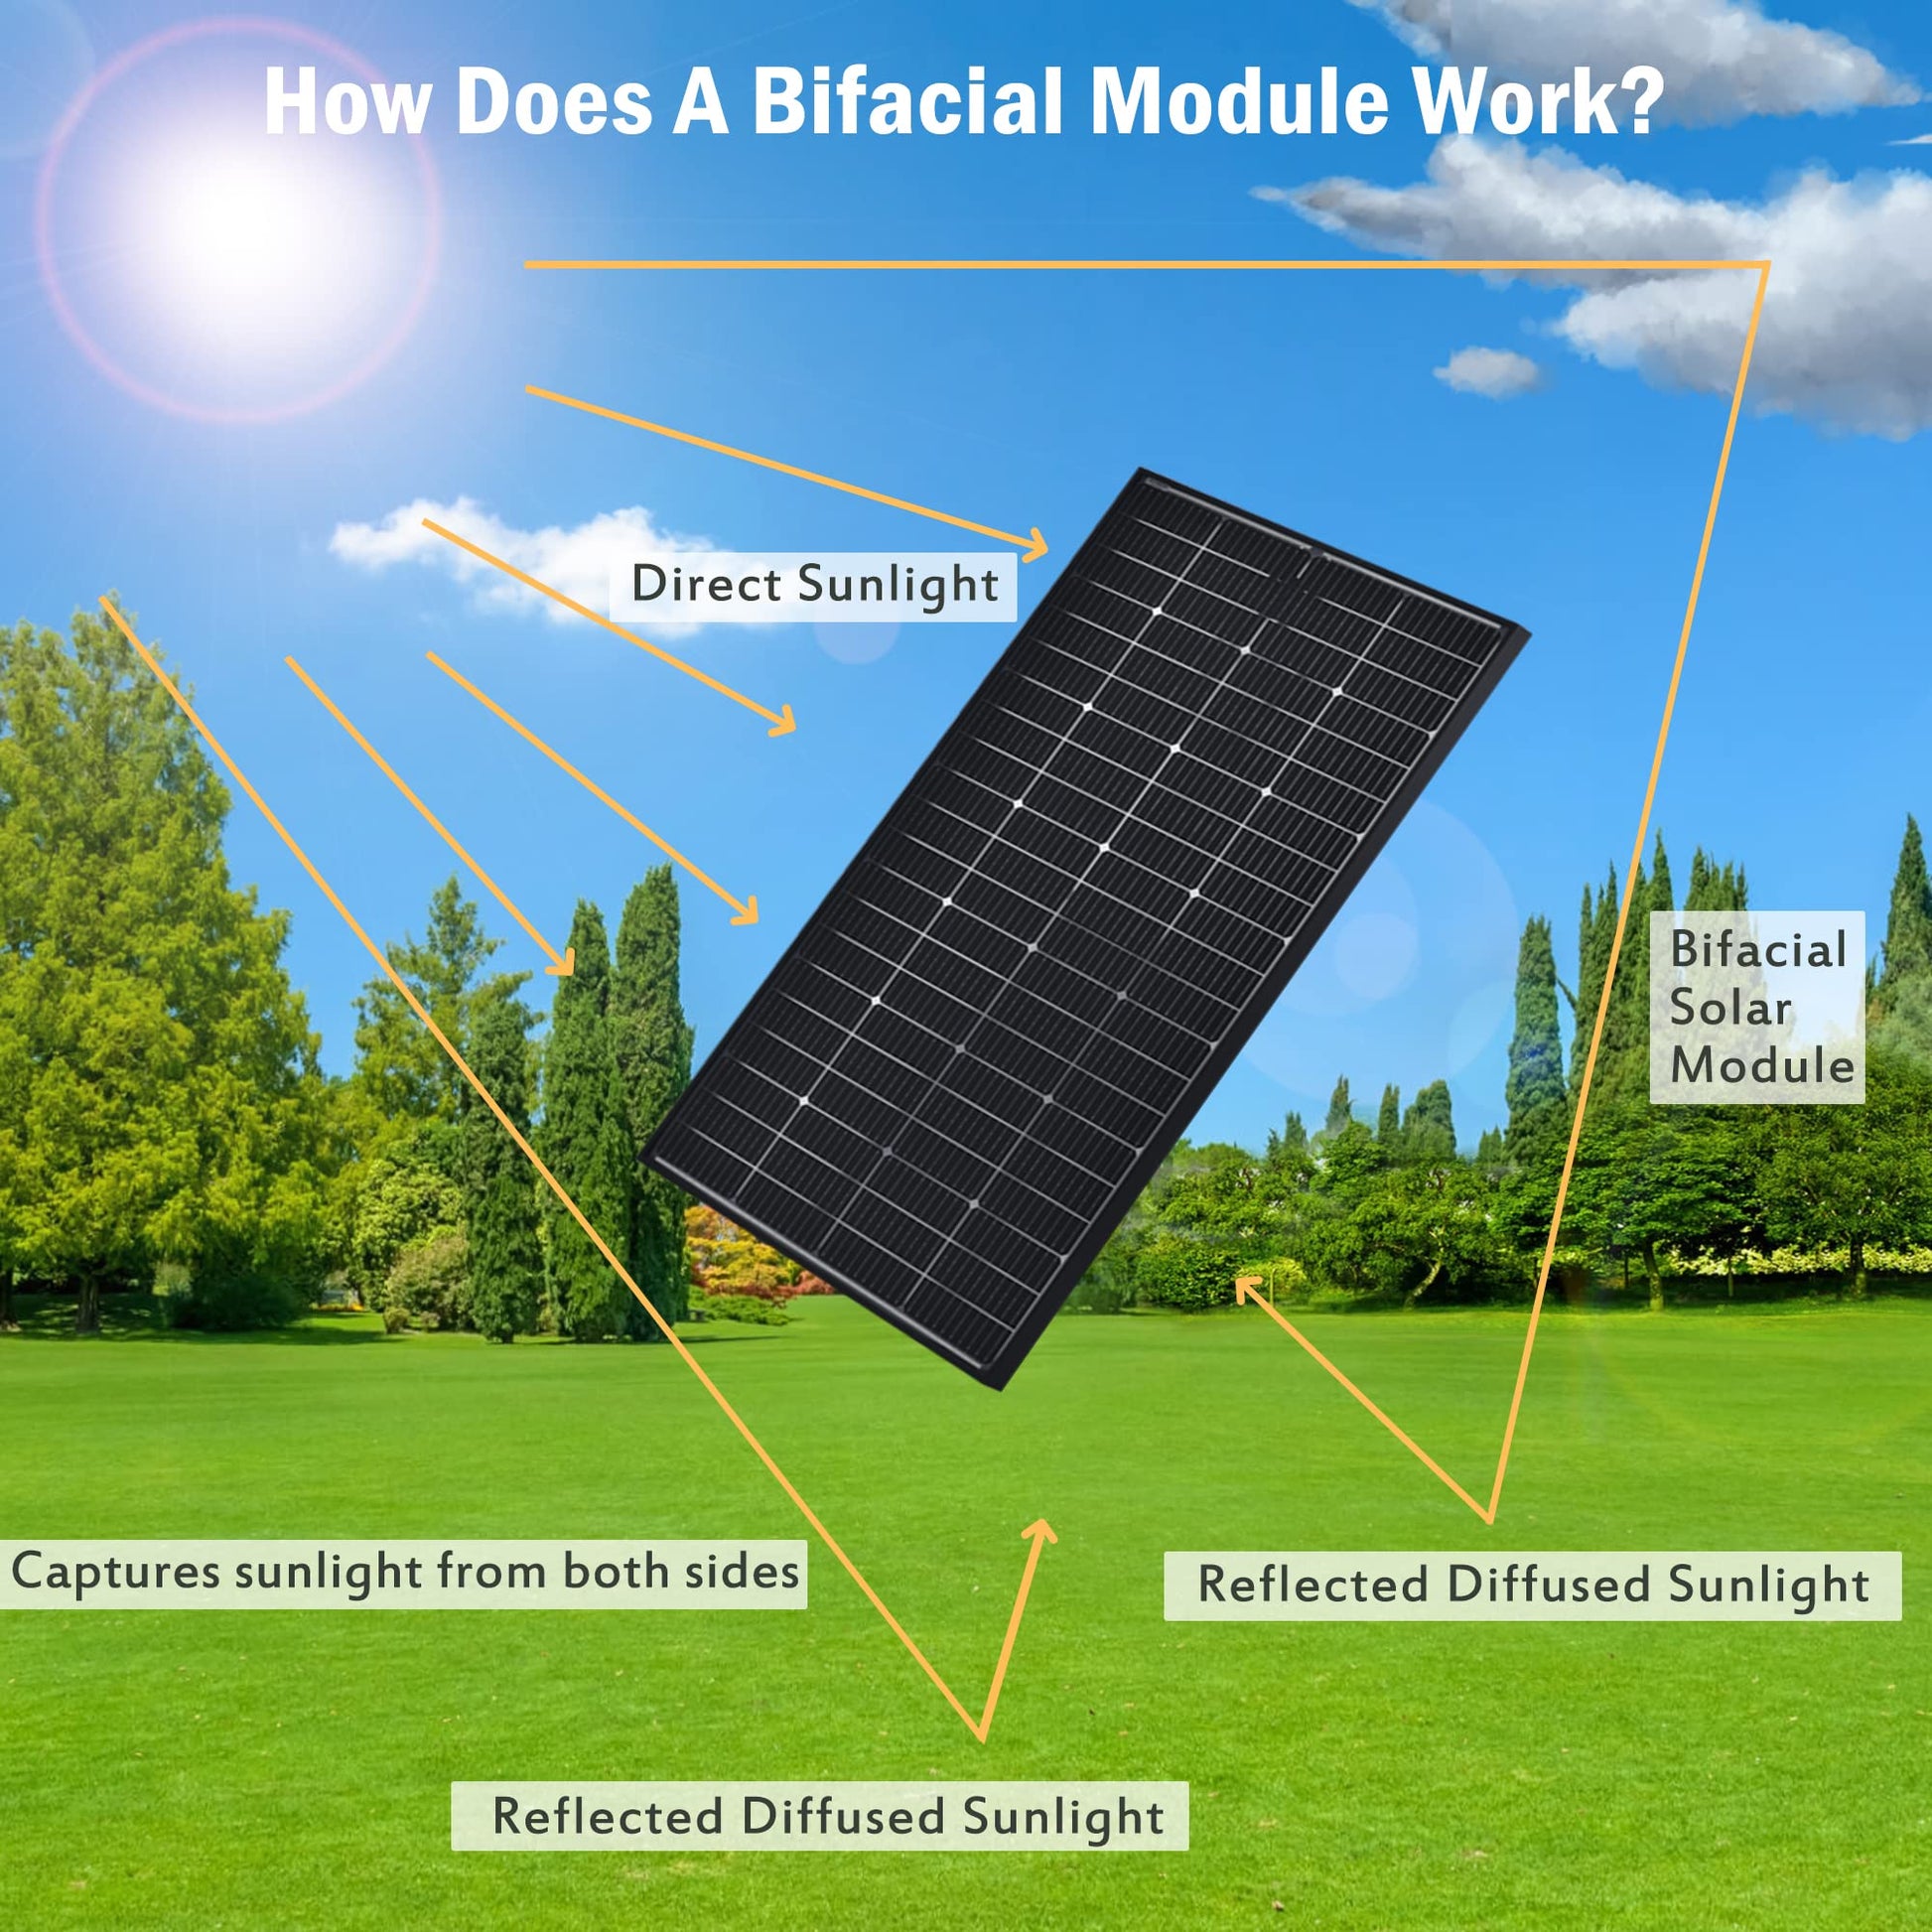 how does a bifacial module work?